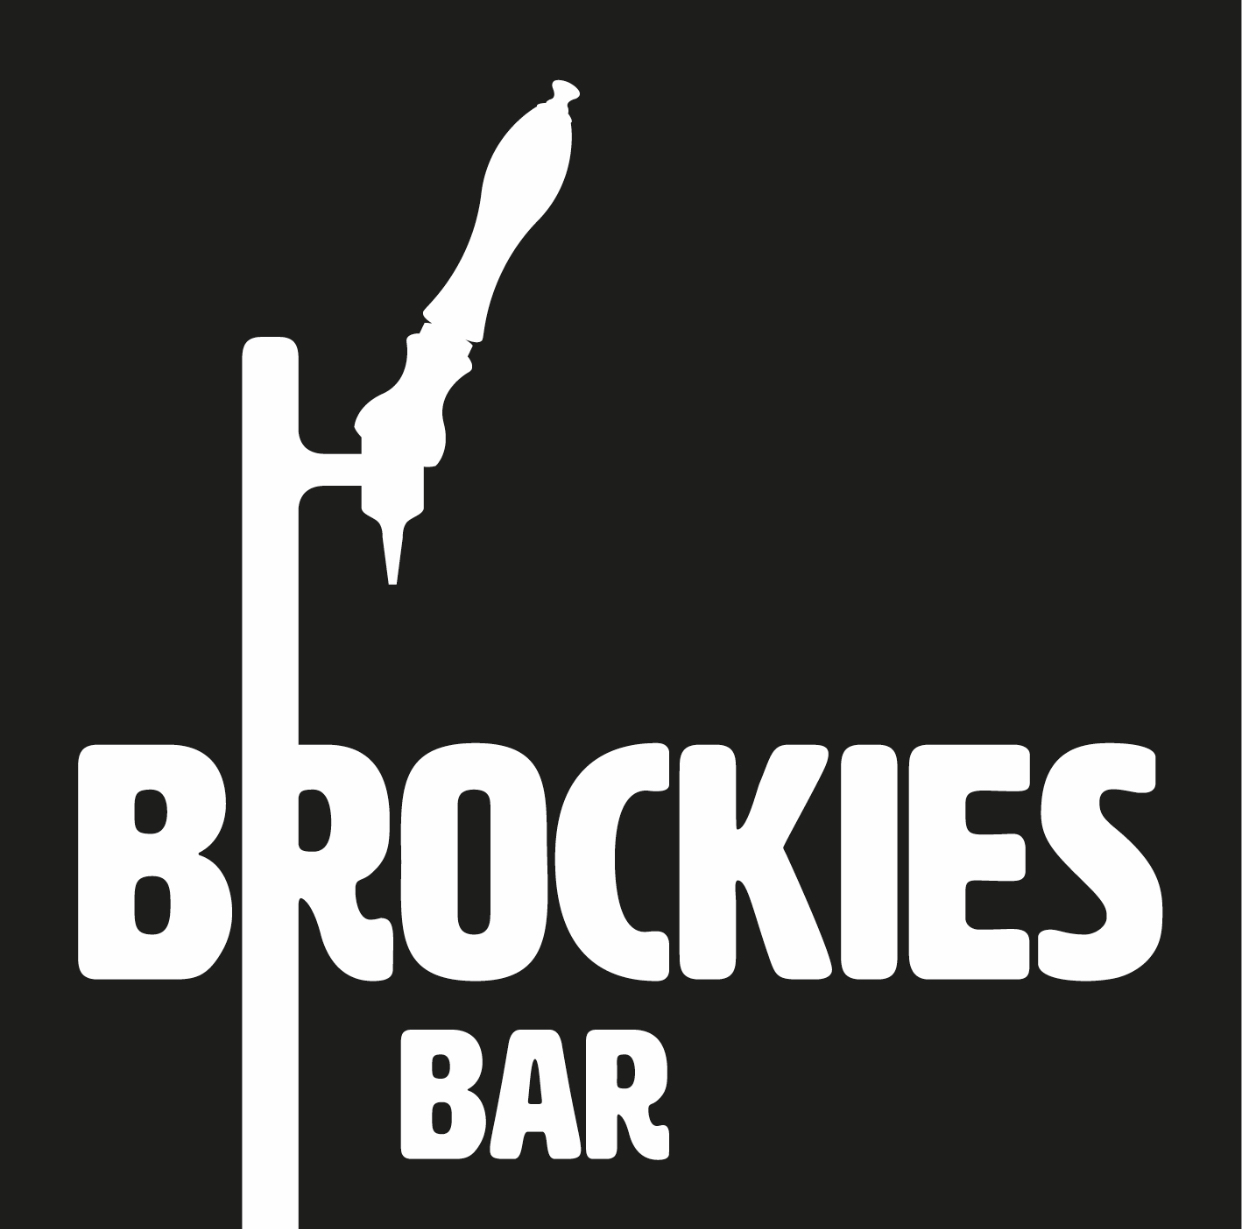 Brockies Bar